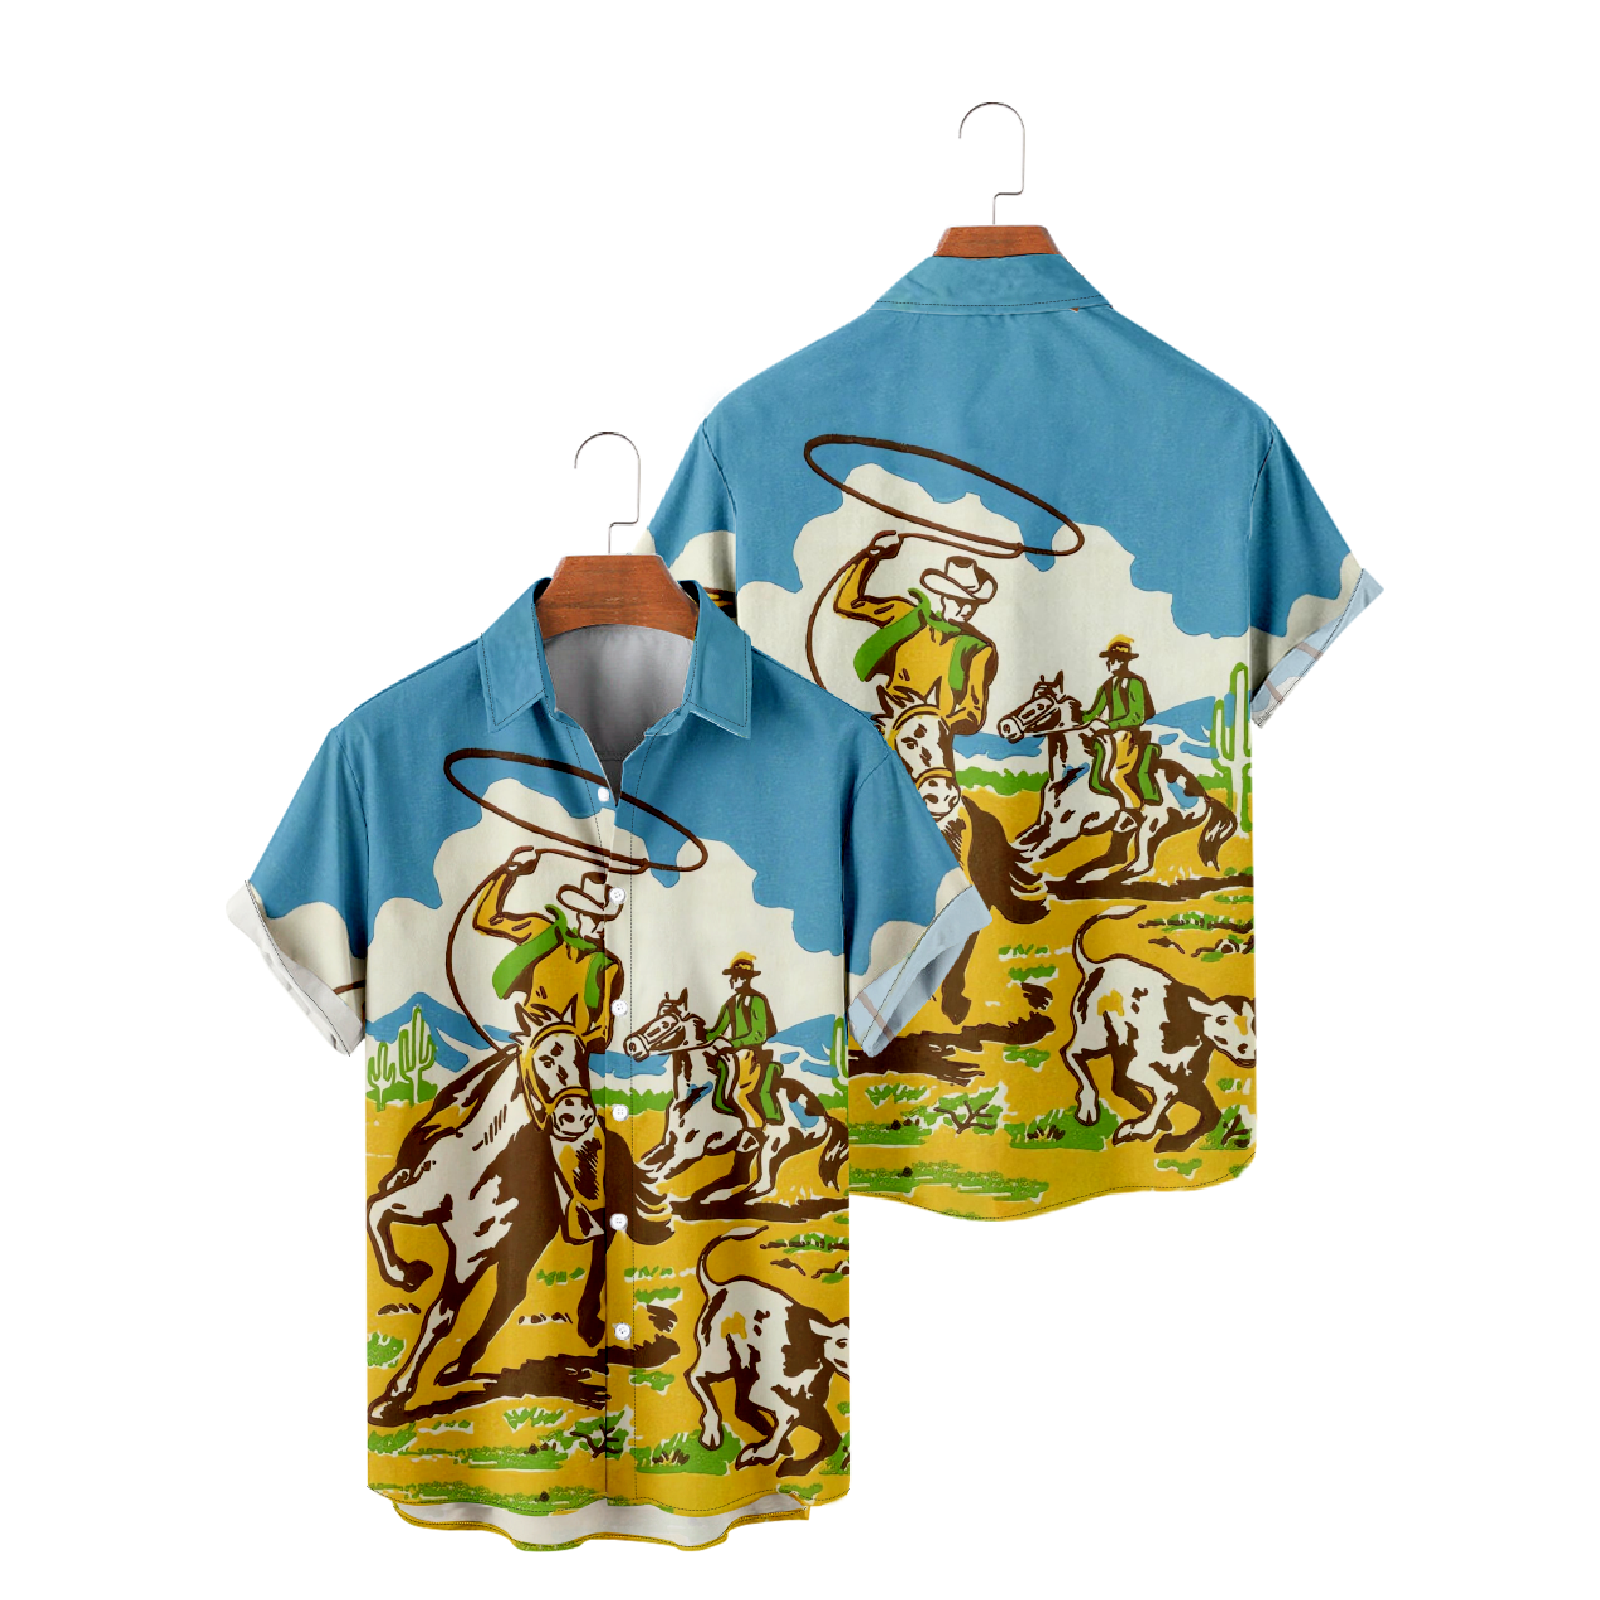 Cowboy Shirt Mens Short Sleeve Button Up Cartoon Graphic Print uhoodie Casual Tops